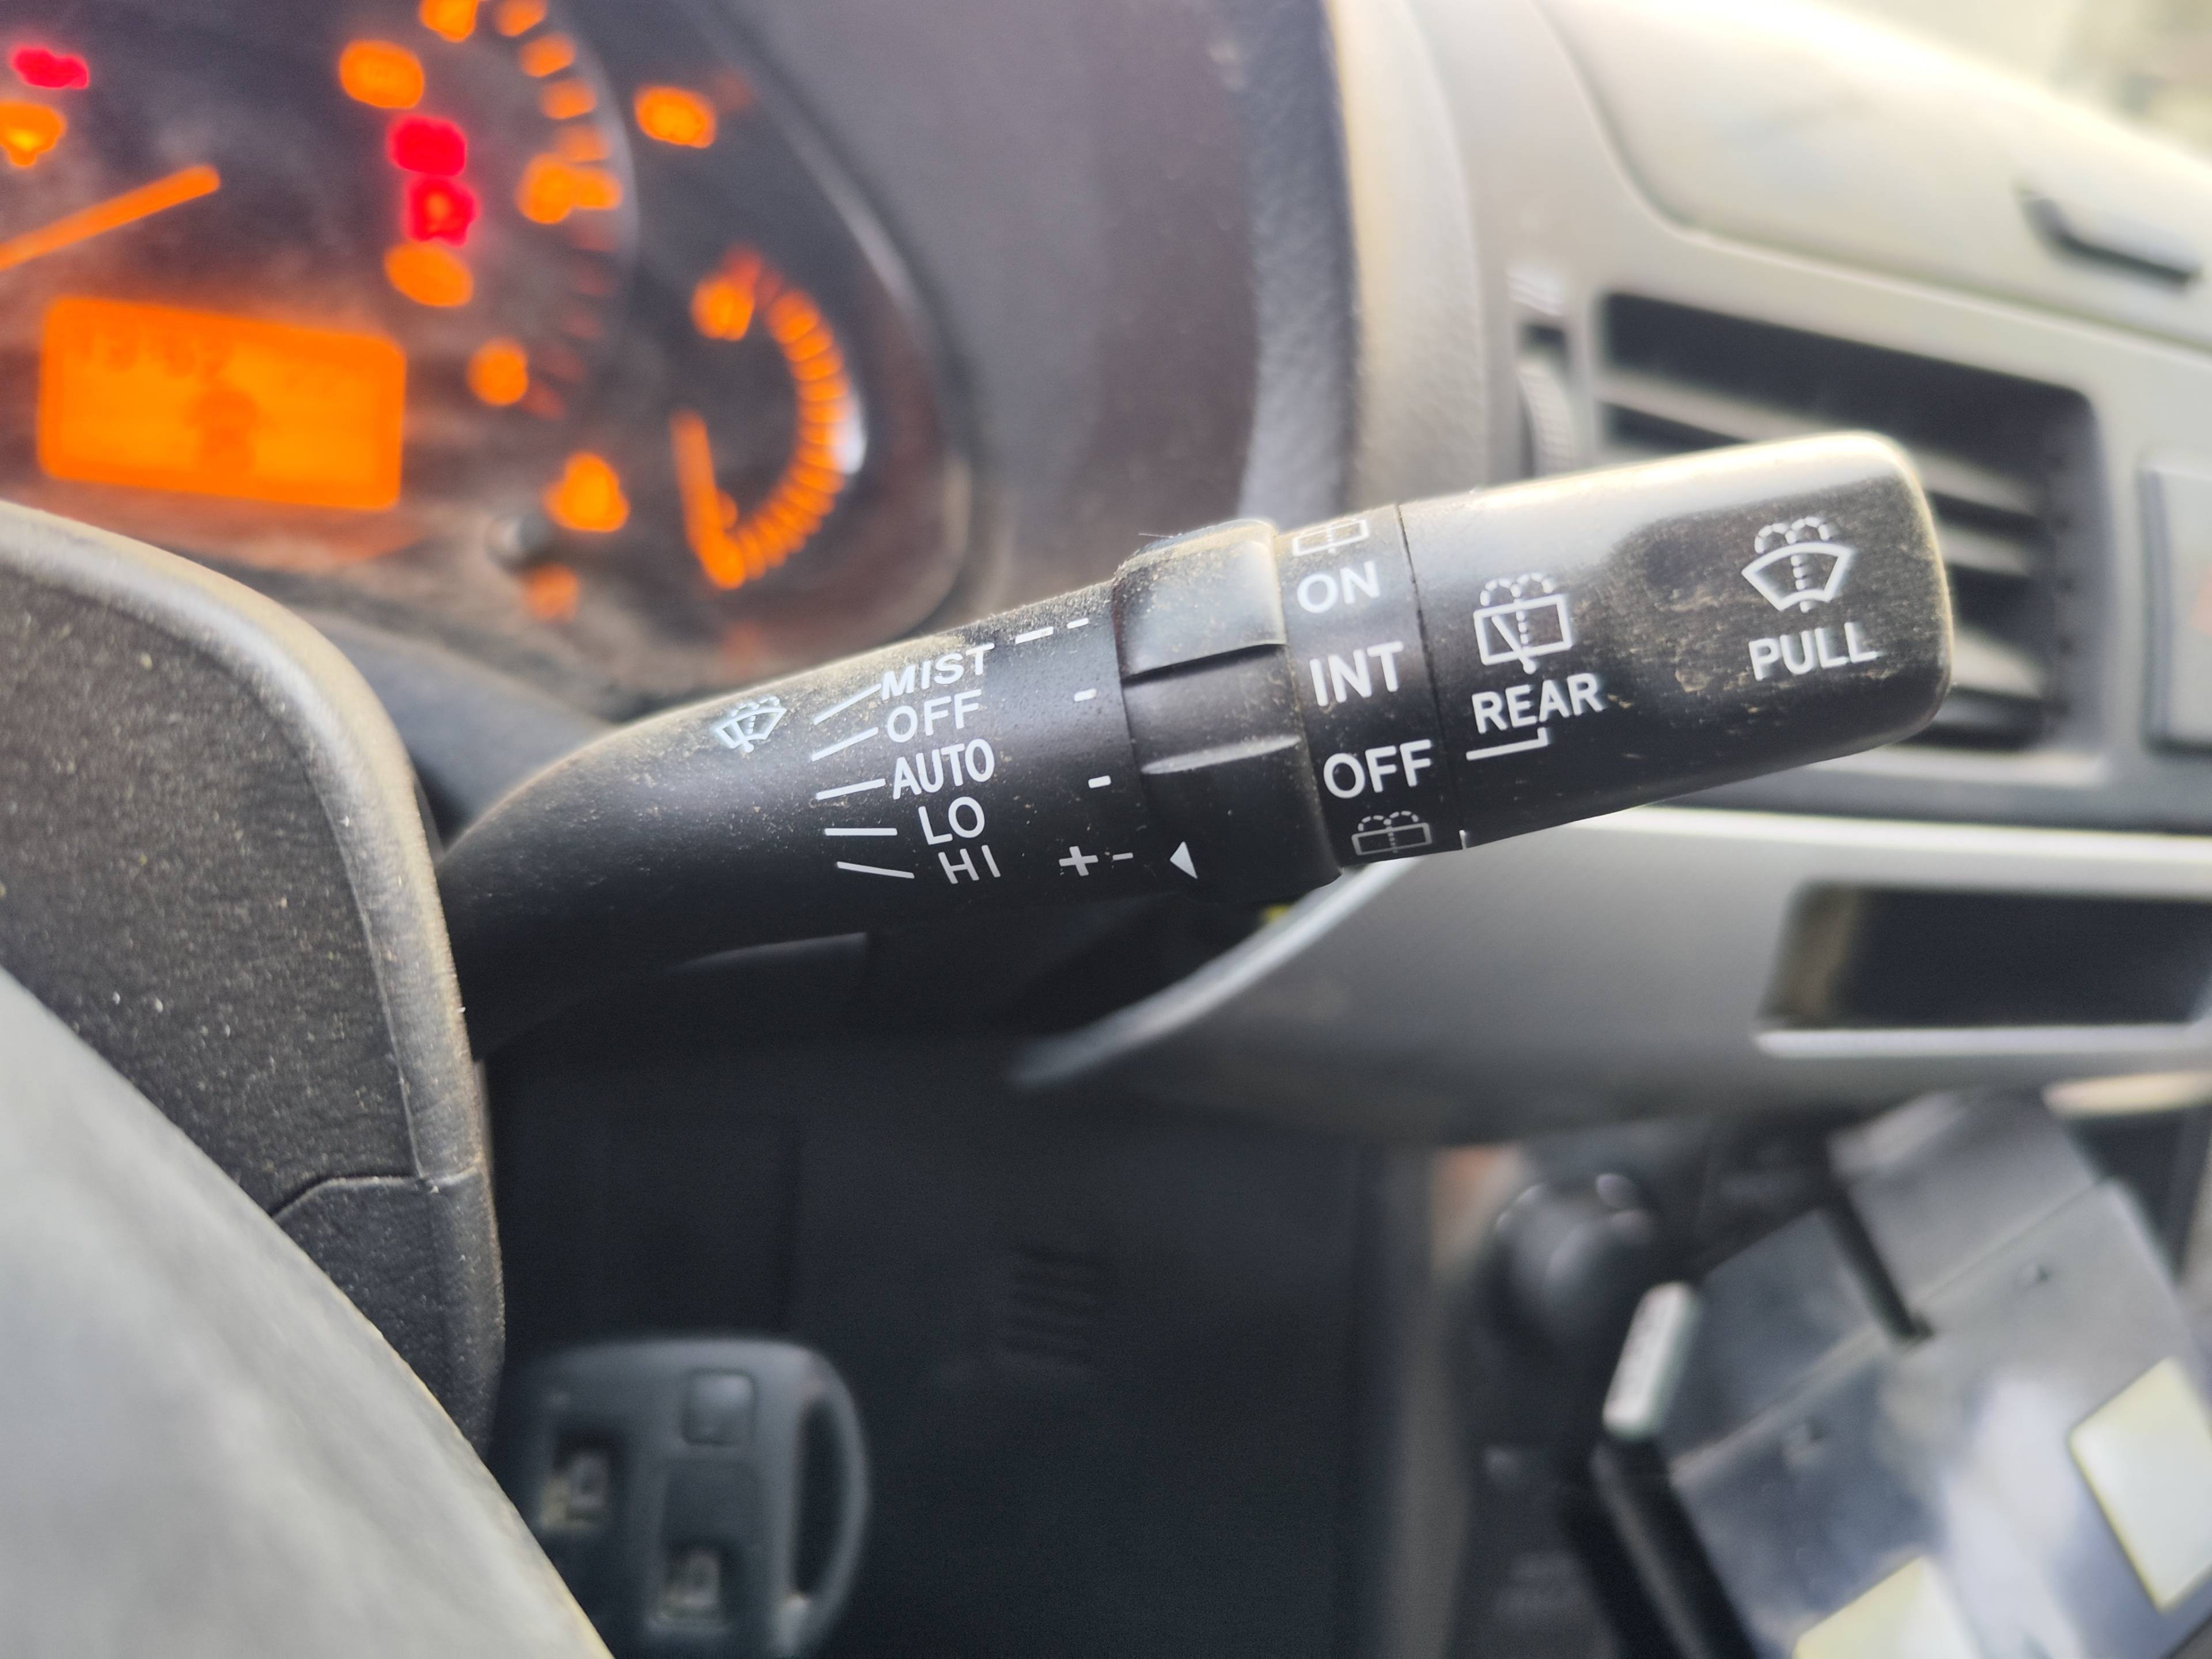 TOYOTA Avensis 2 generation (2002-2009) Headlight Control Unit 8996005030 24692579